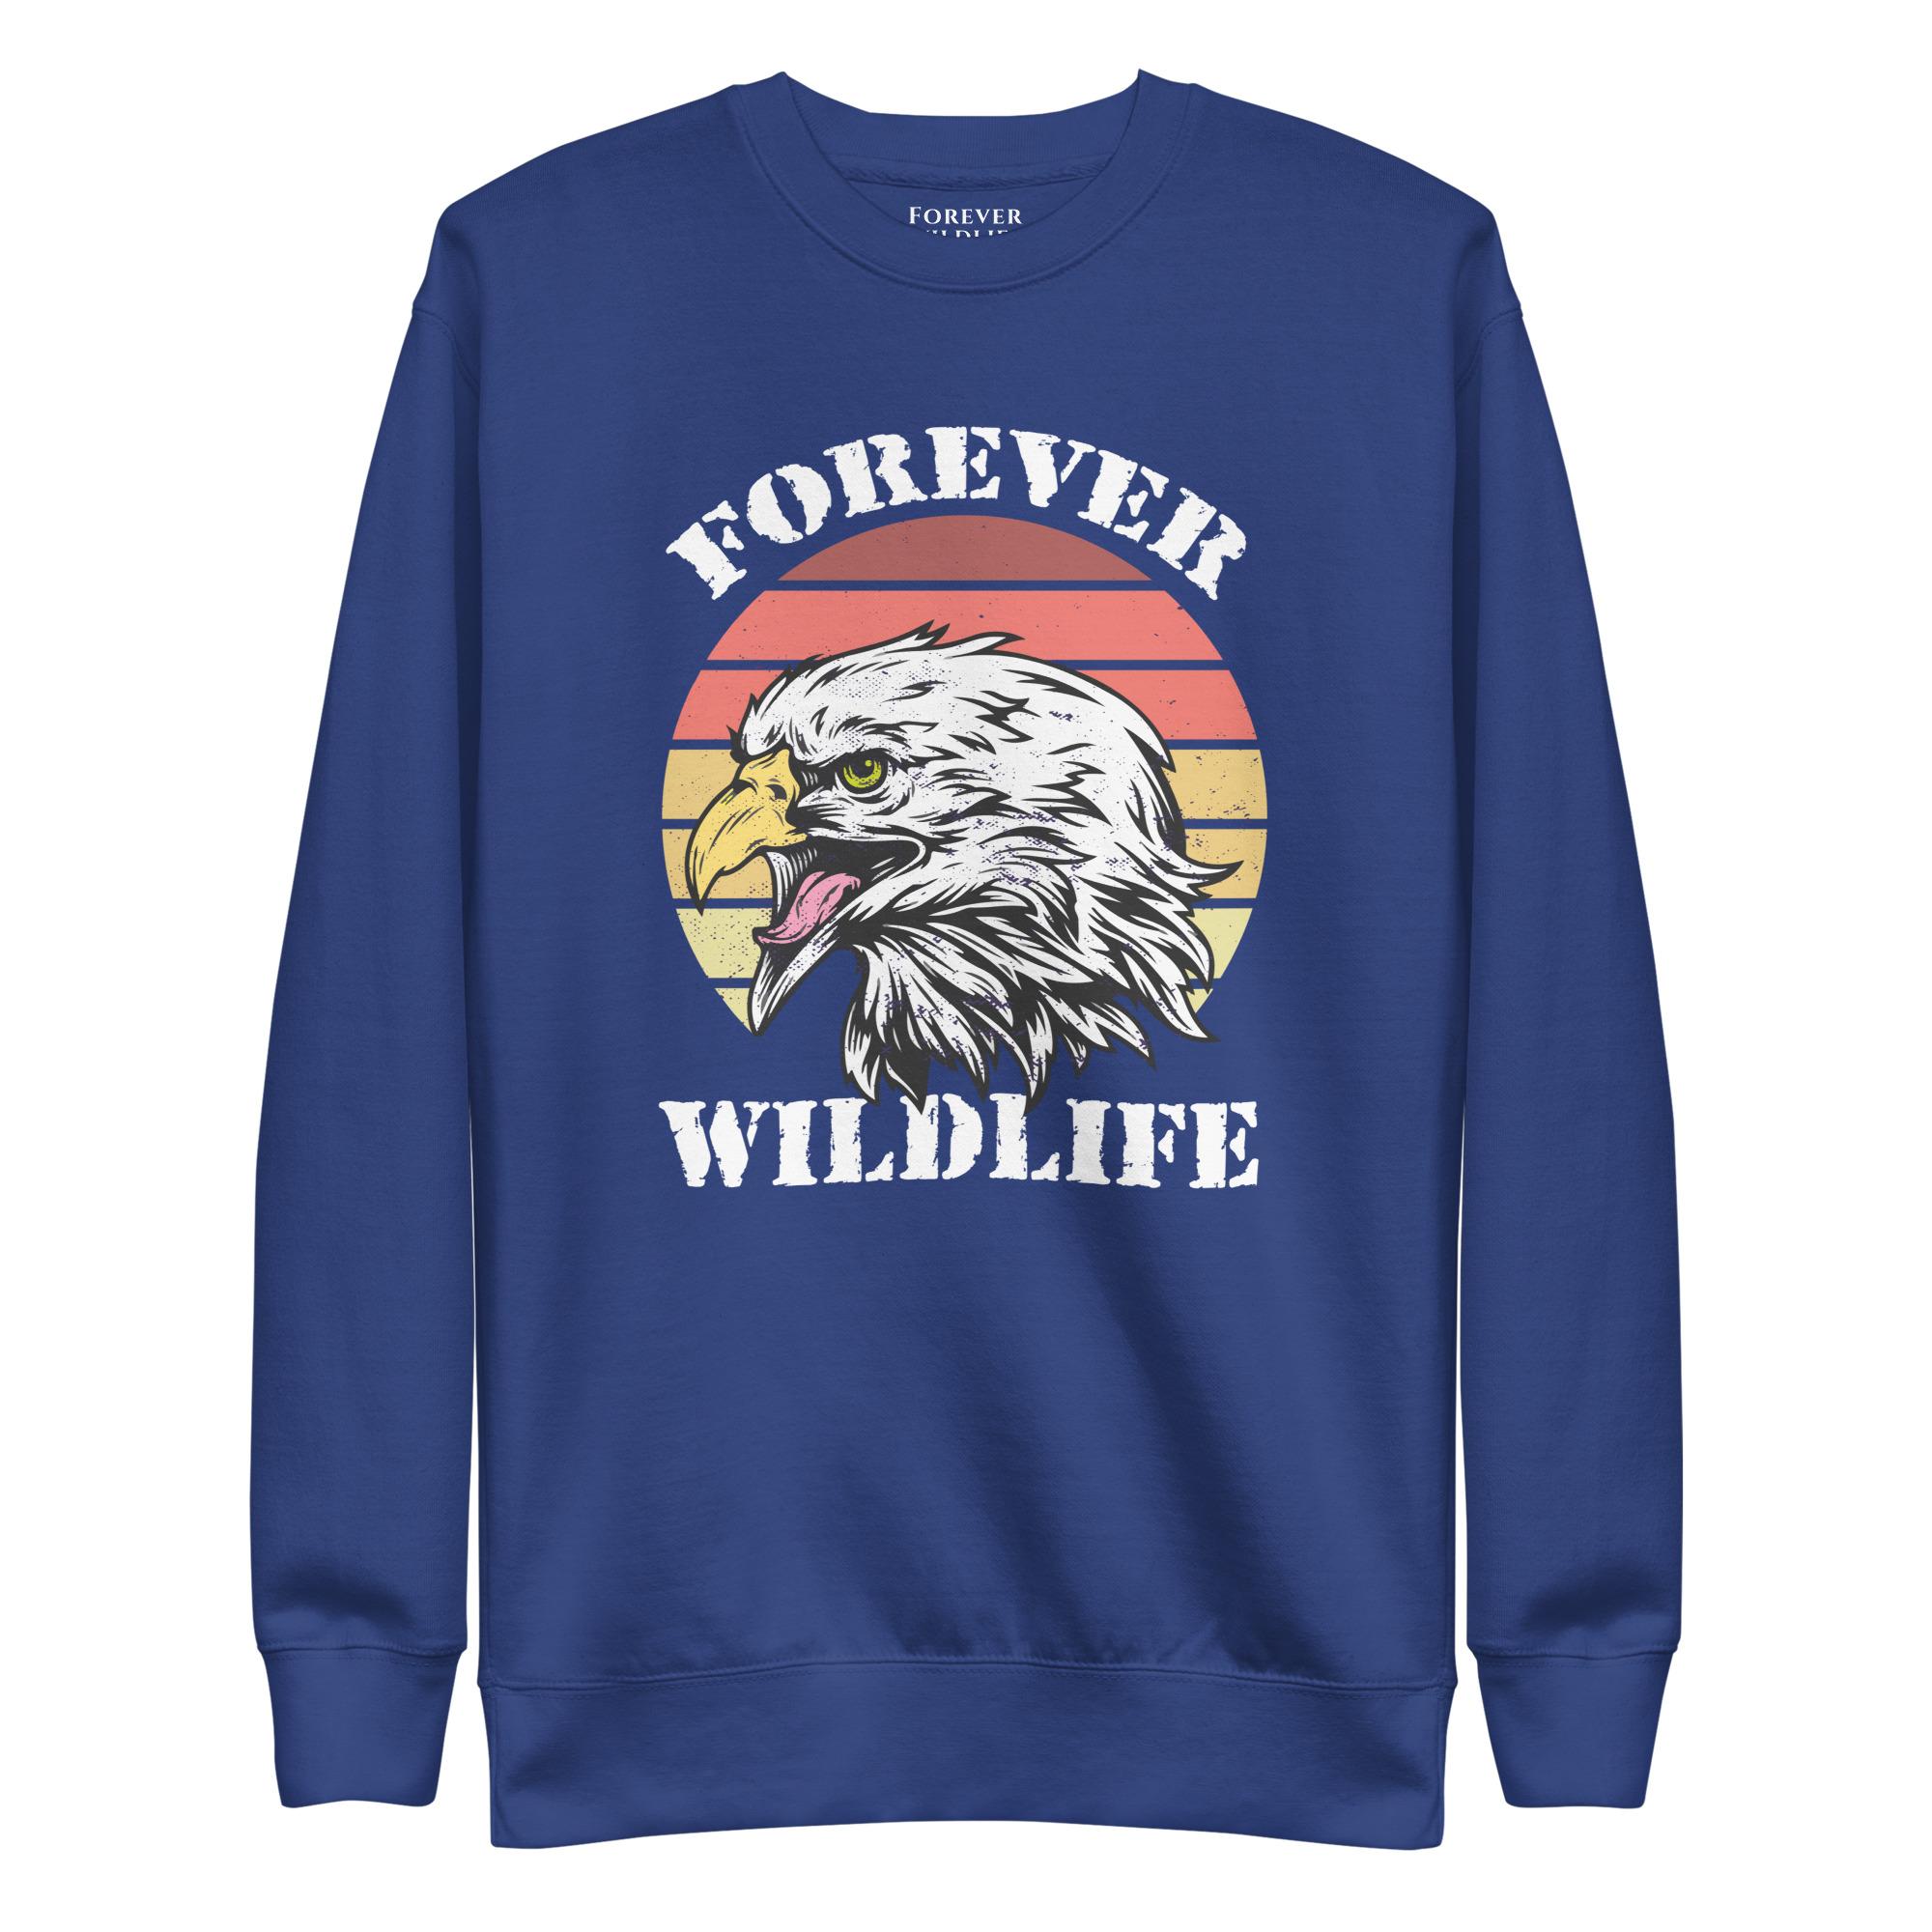 Eagle Sweatshirt in Team Royal-Premium Wildlife Animal Inspiration Sweatshirt Design, part of Wildlife Sweatshirts & Clothing from Forever Wildlife.